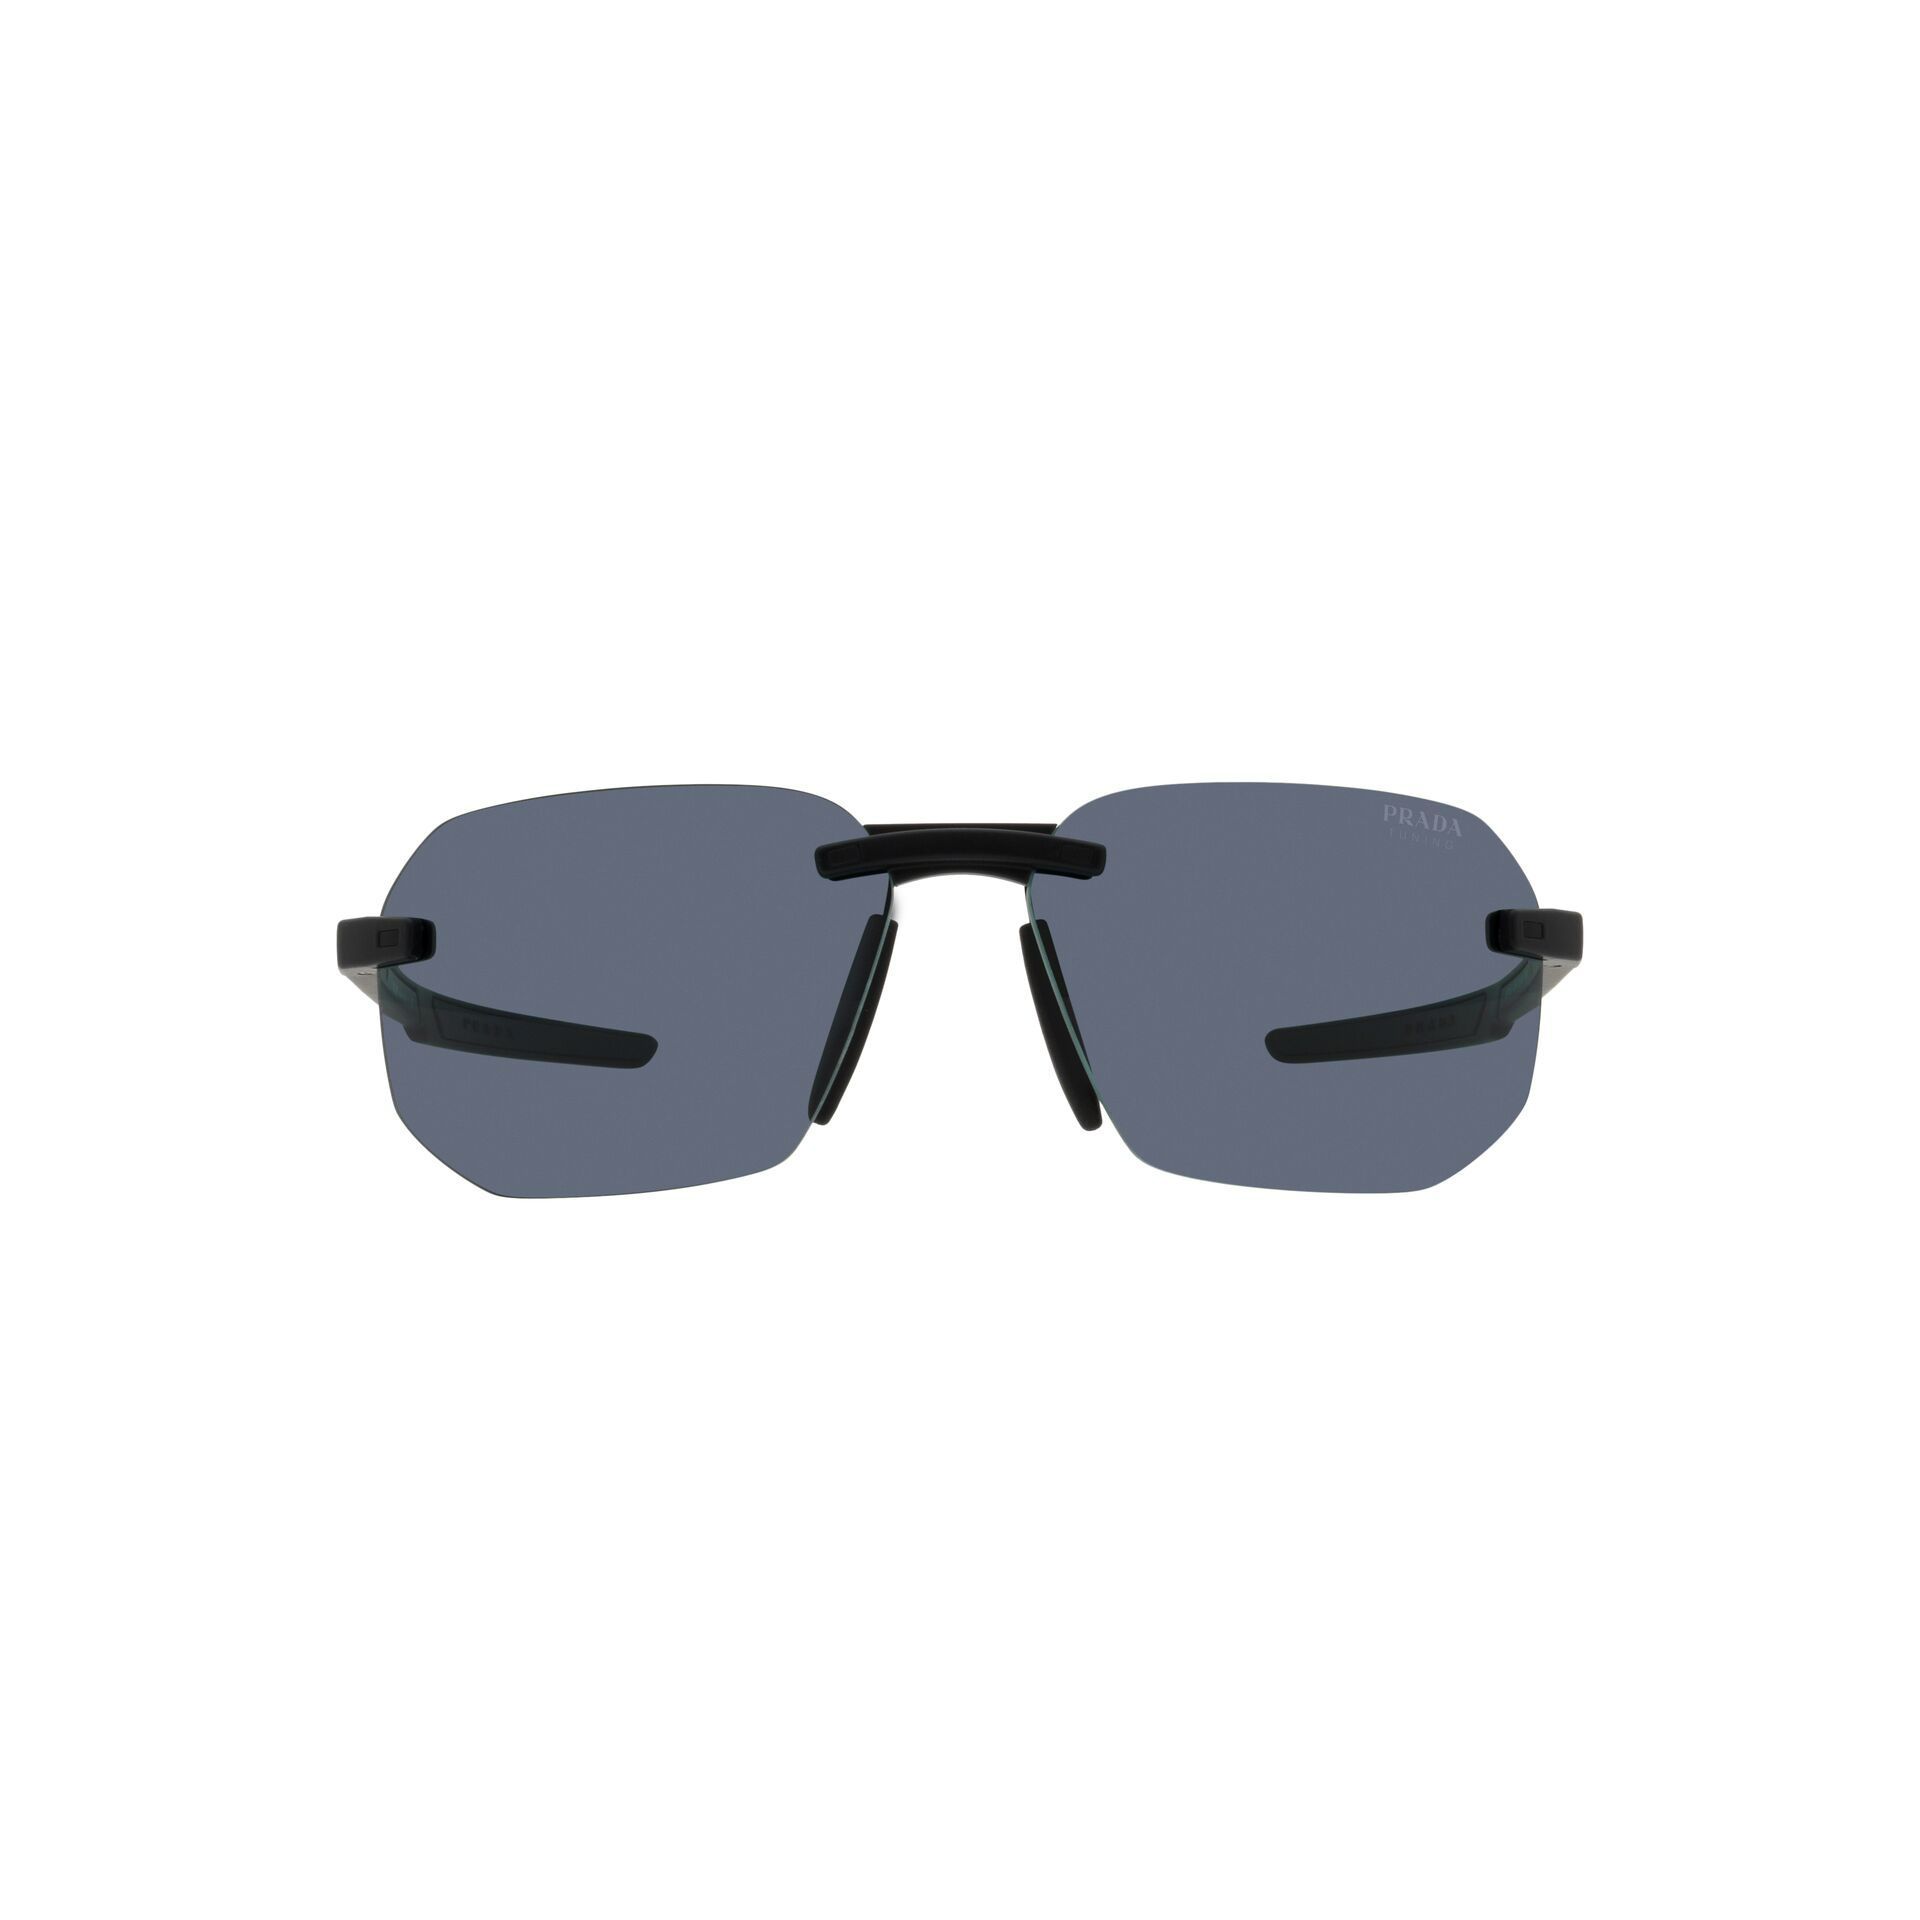 PS 09WS Oval Sunglasses DG009R - size 62